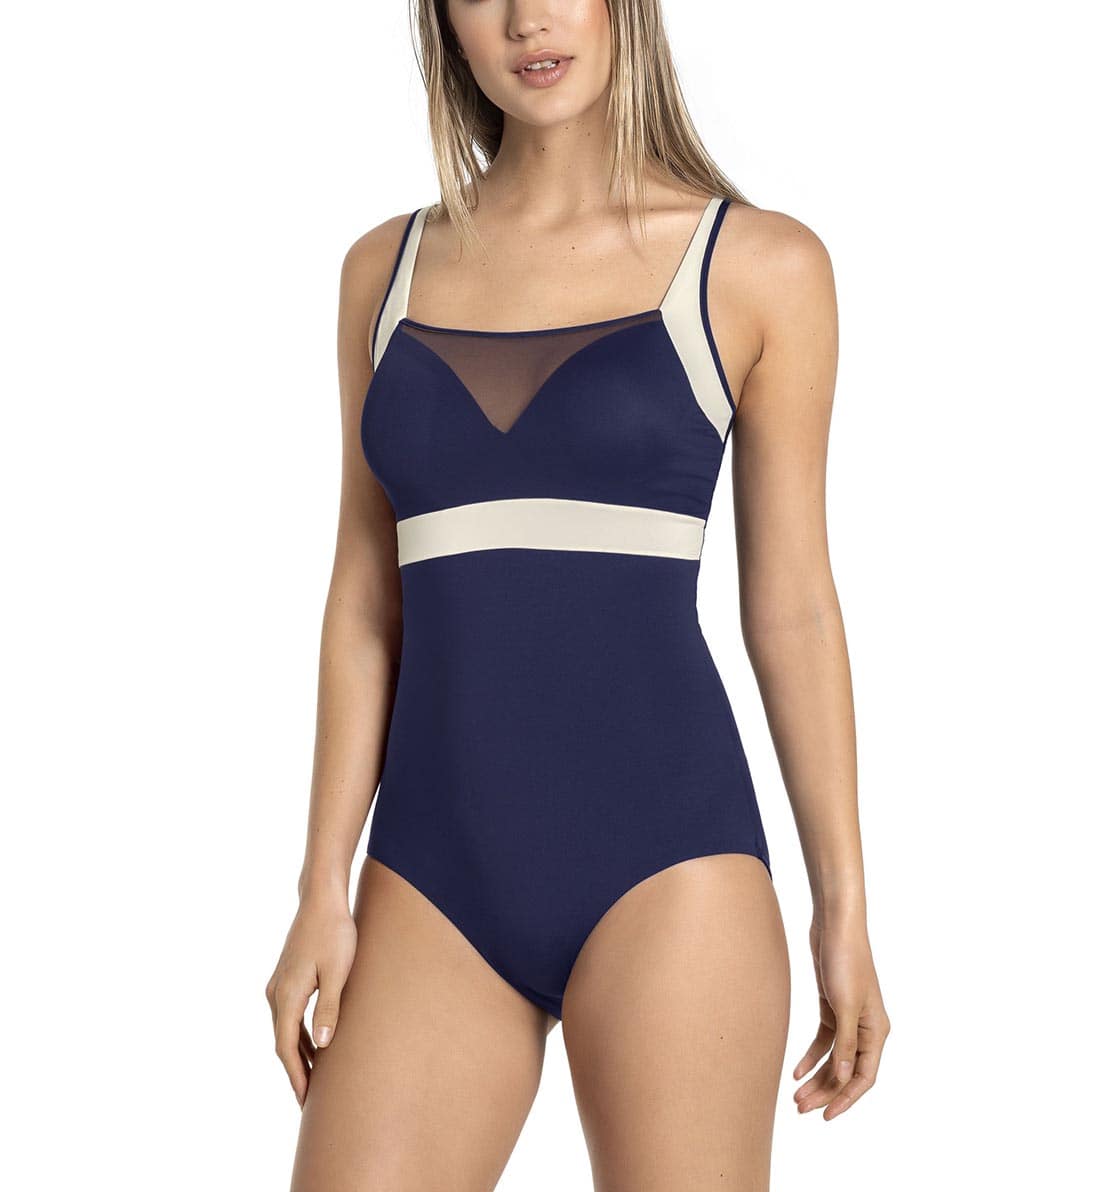 Leonisa Sporty Shaping One Piece Swimsuit (190978),Medium,Dark Blue - Dark Blue,Medium